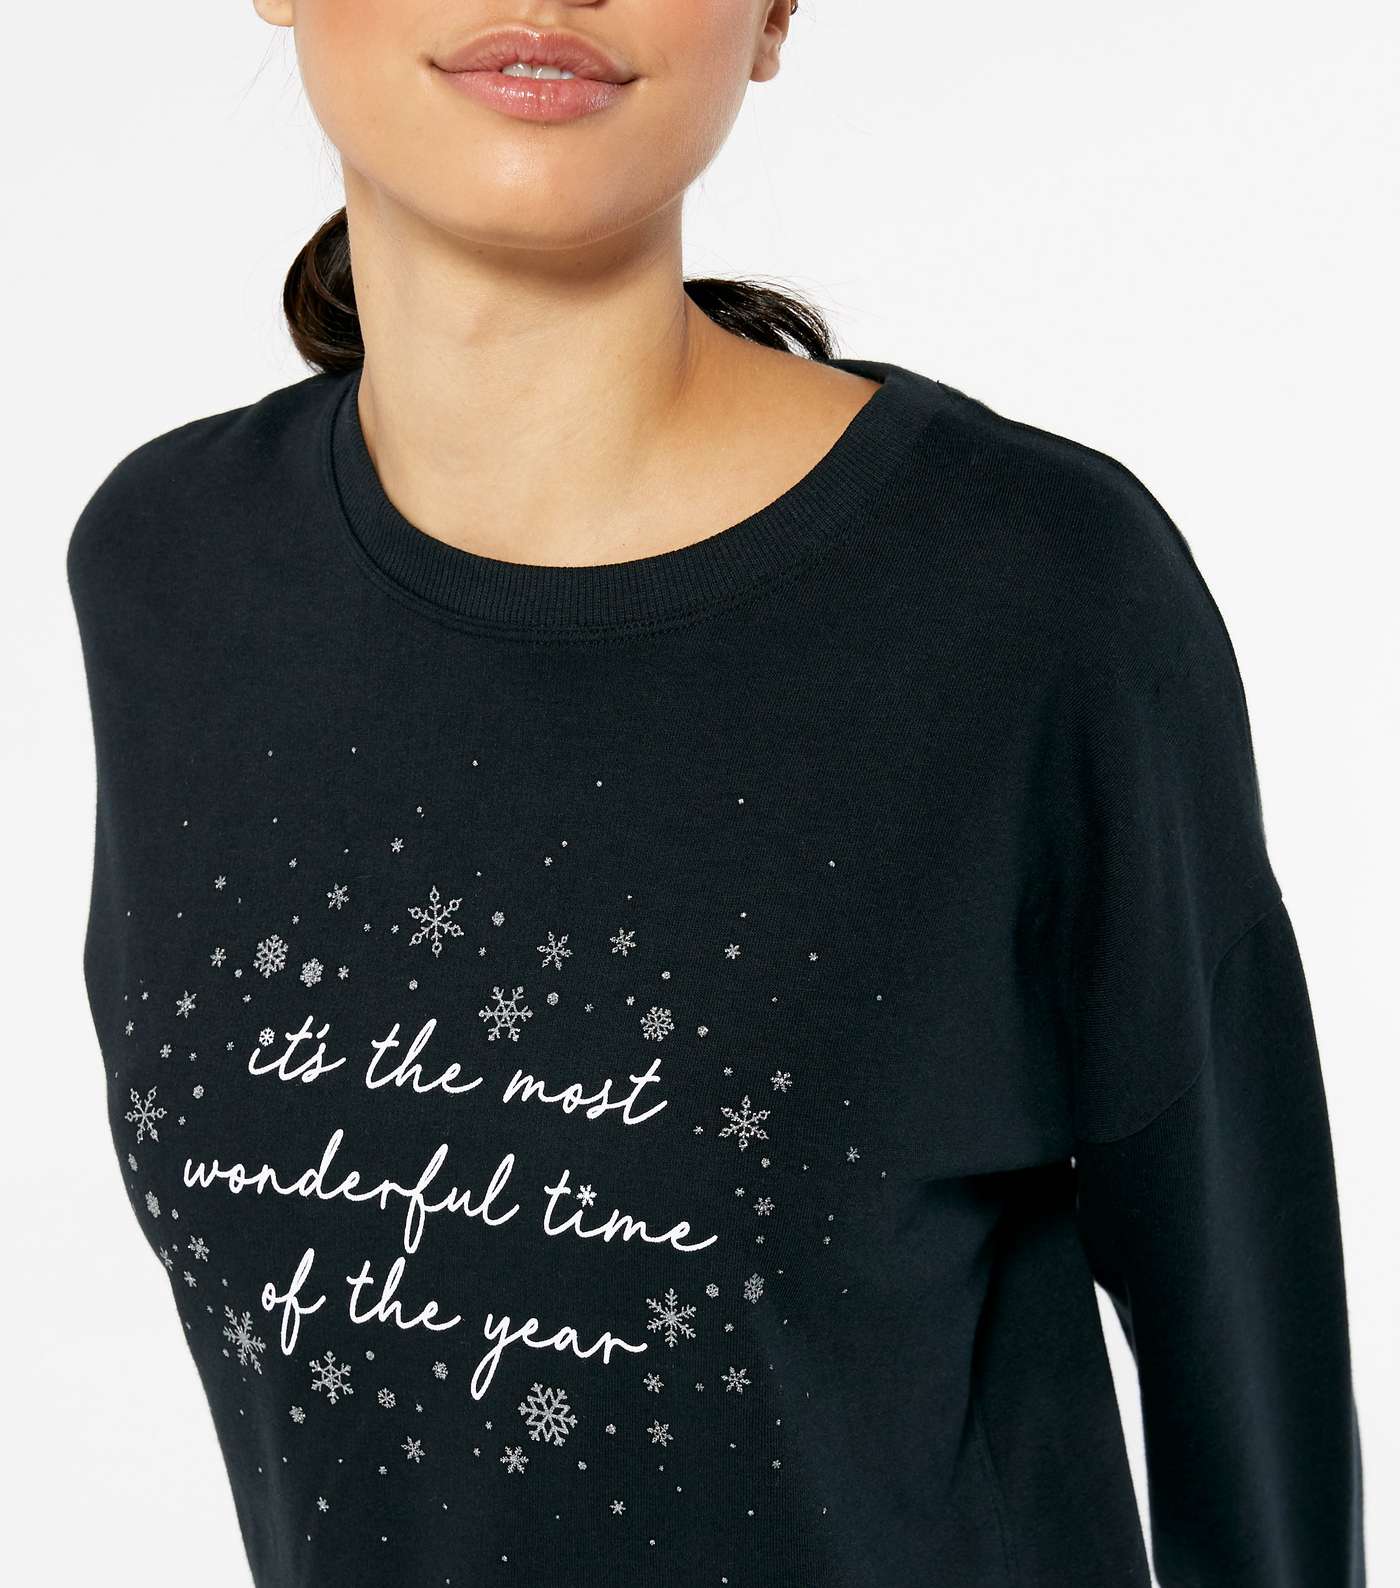 Black Wonderful Time Christmas Slogan Sweatshirt Image 5